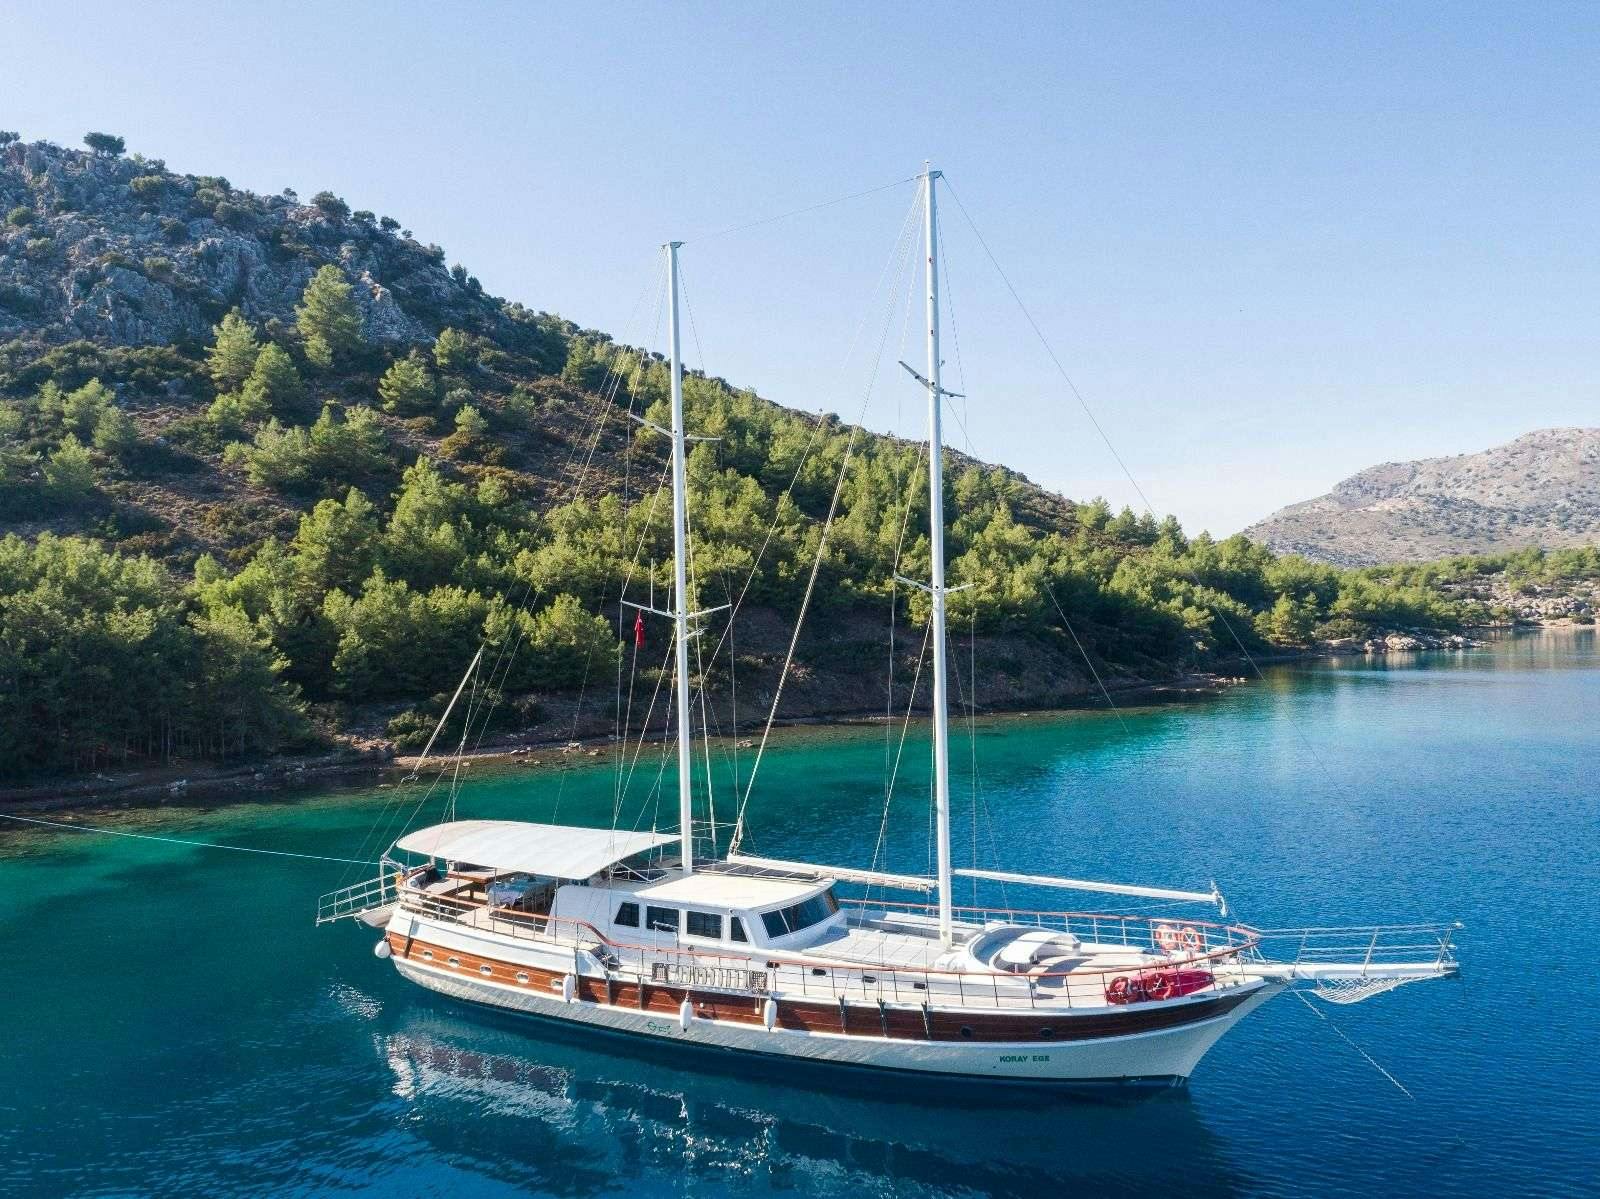 koray ege - Yacht Charter Corinth & Boat hire in Greece & Turkey 1